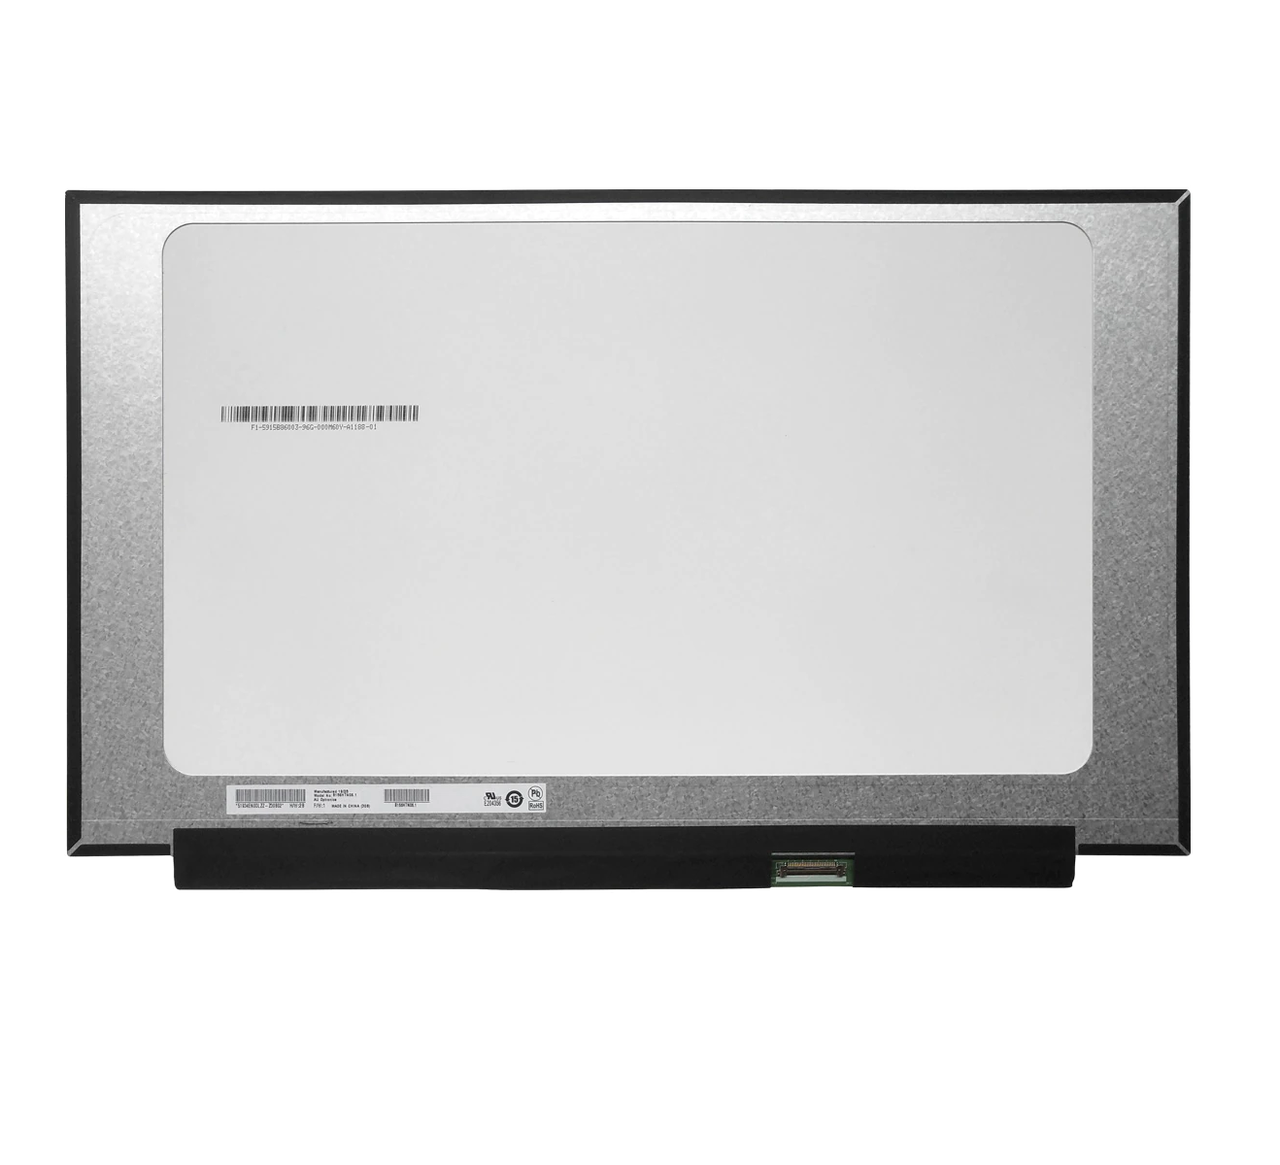 Матрица (экран) для ноутбука Sharp LQ156M1JW03, 15,6 40 eDp Slim, 1920x1080, IPS, 240Hz